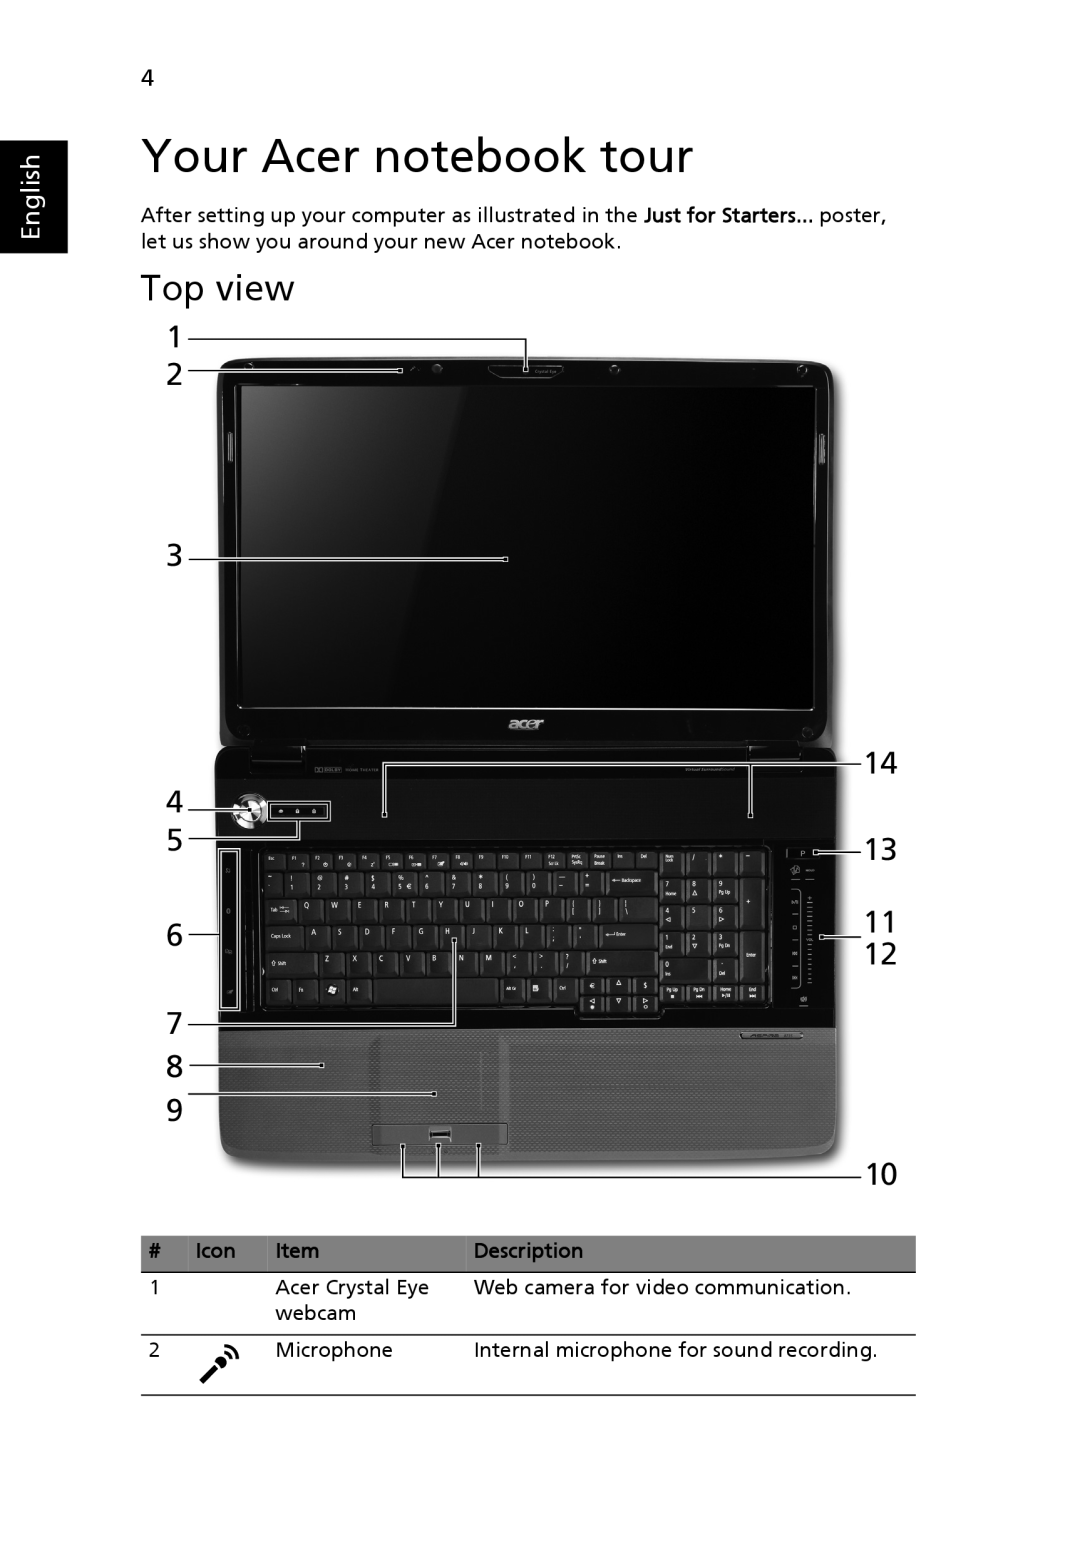 Acer 8735Z manual Your Acer notebook tour, Top view, English, # Icon, Description 